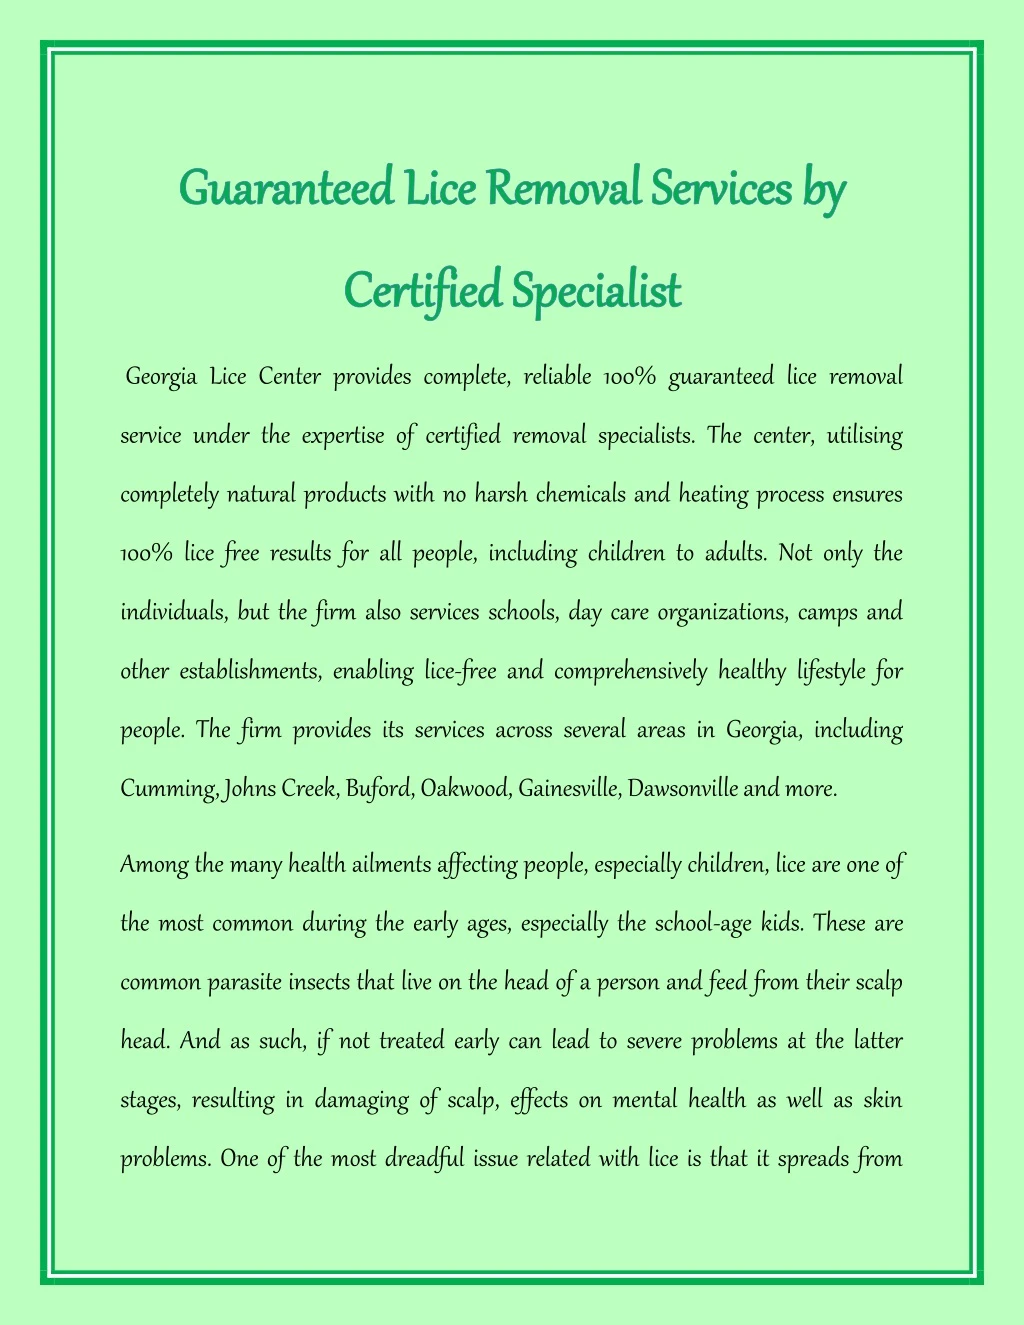 georgia lice center provides complete reliable